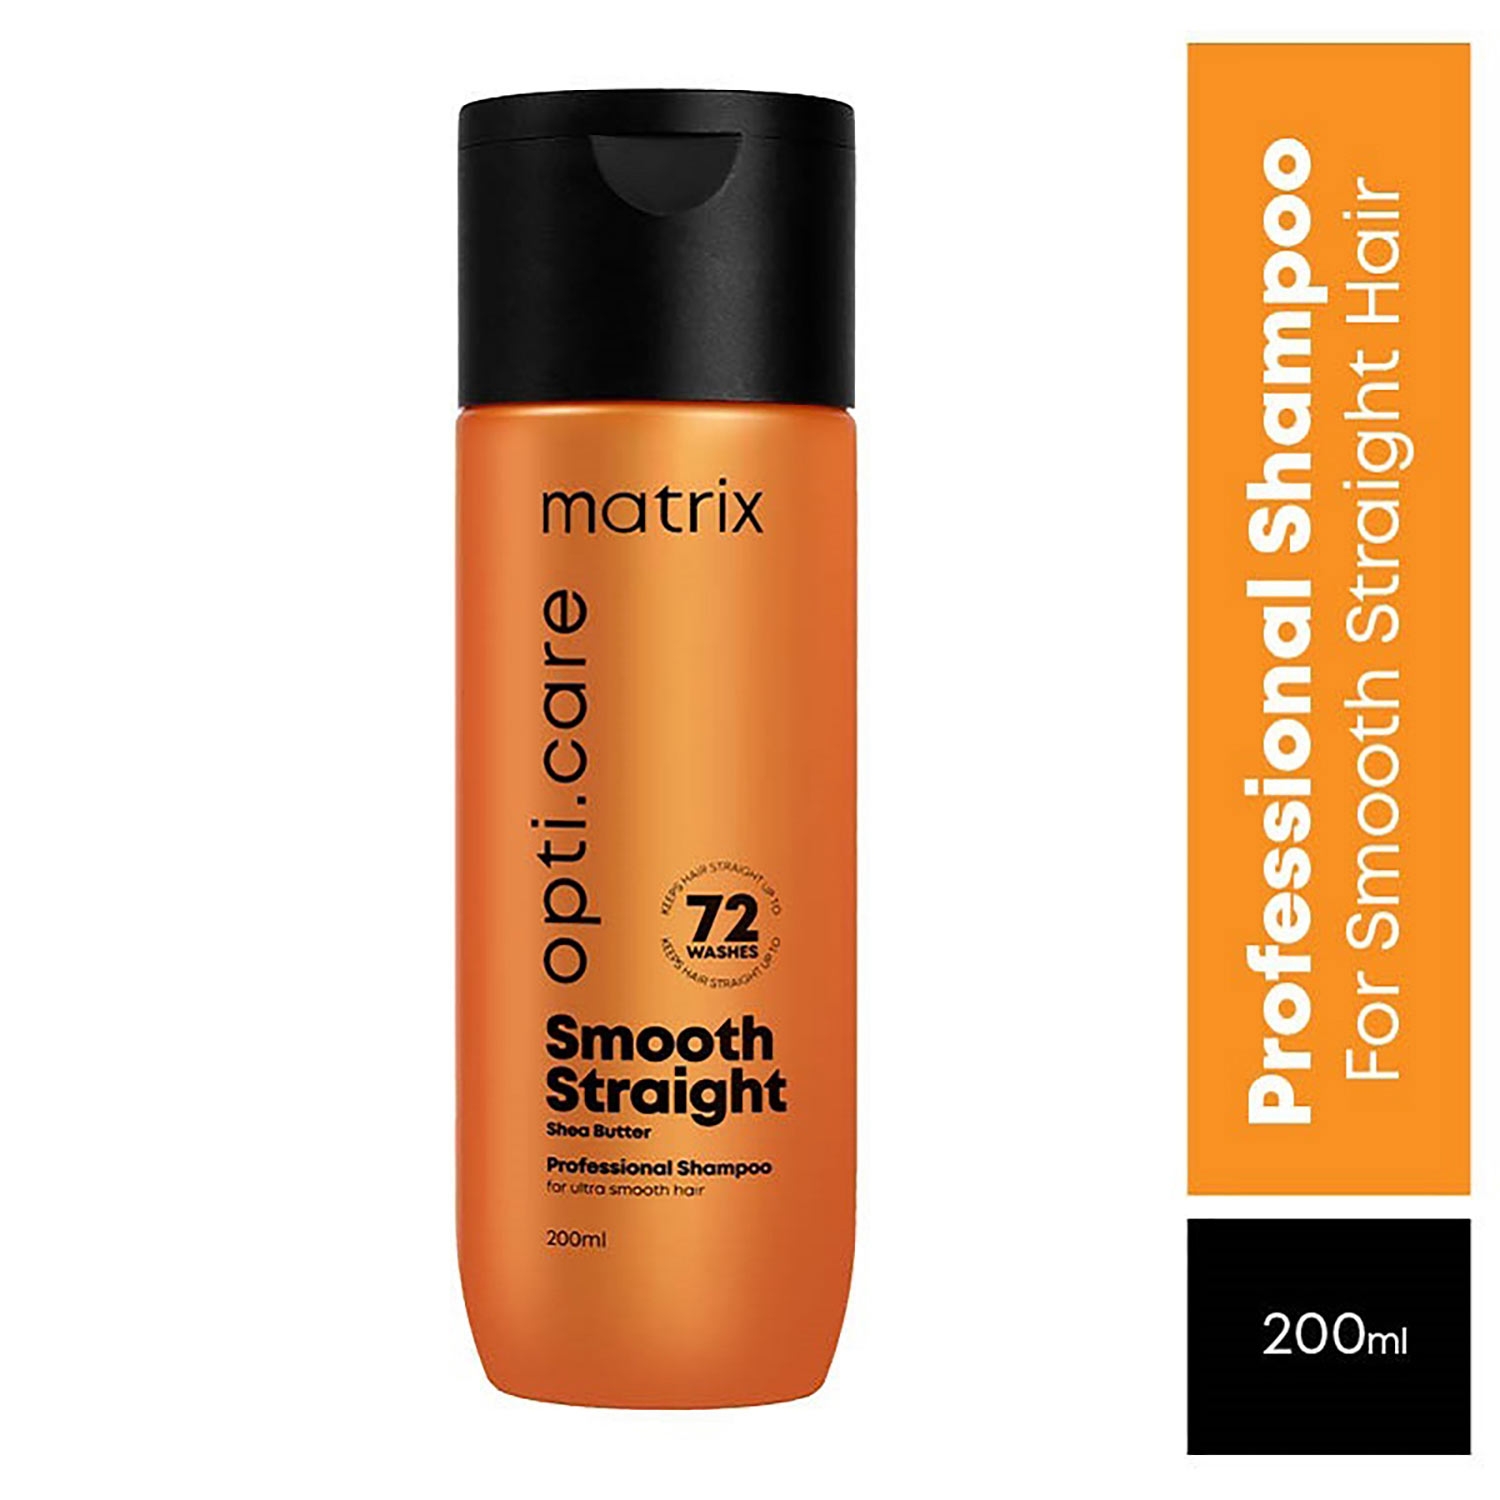 Matrix Opti Care Smooth Straight Professional Shampoo (200ml)